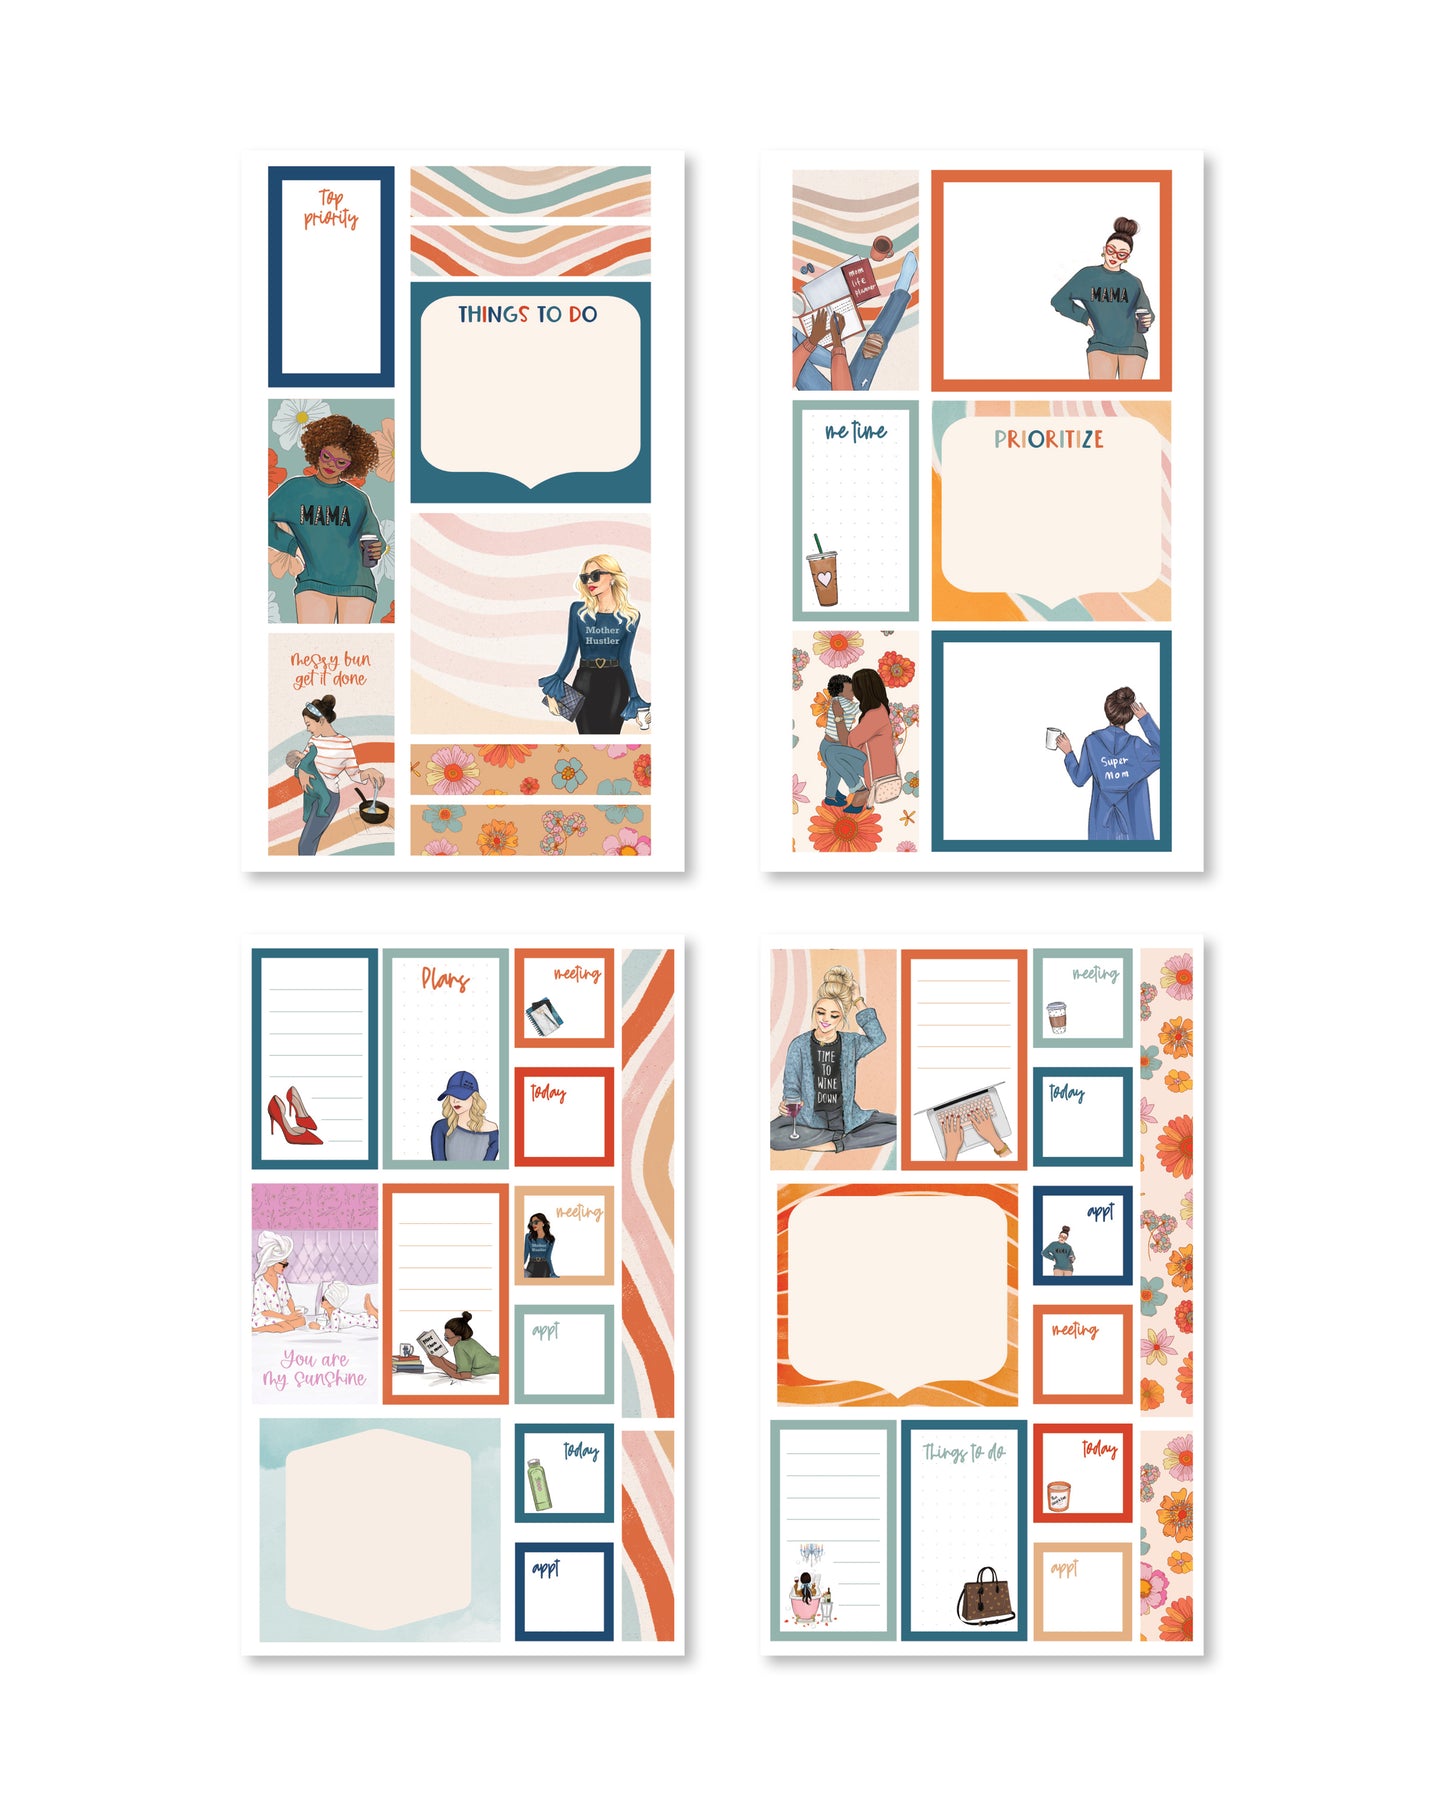 Mom Life Planner Sticker Book (Set of 6)